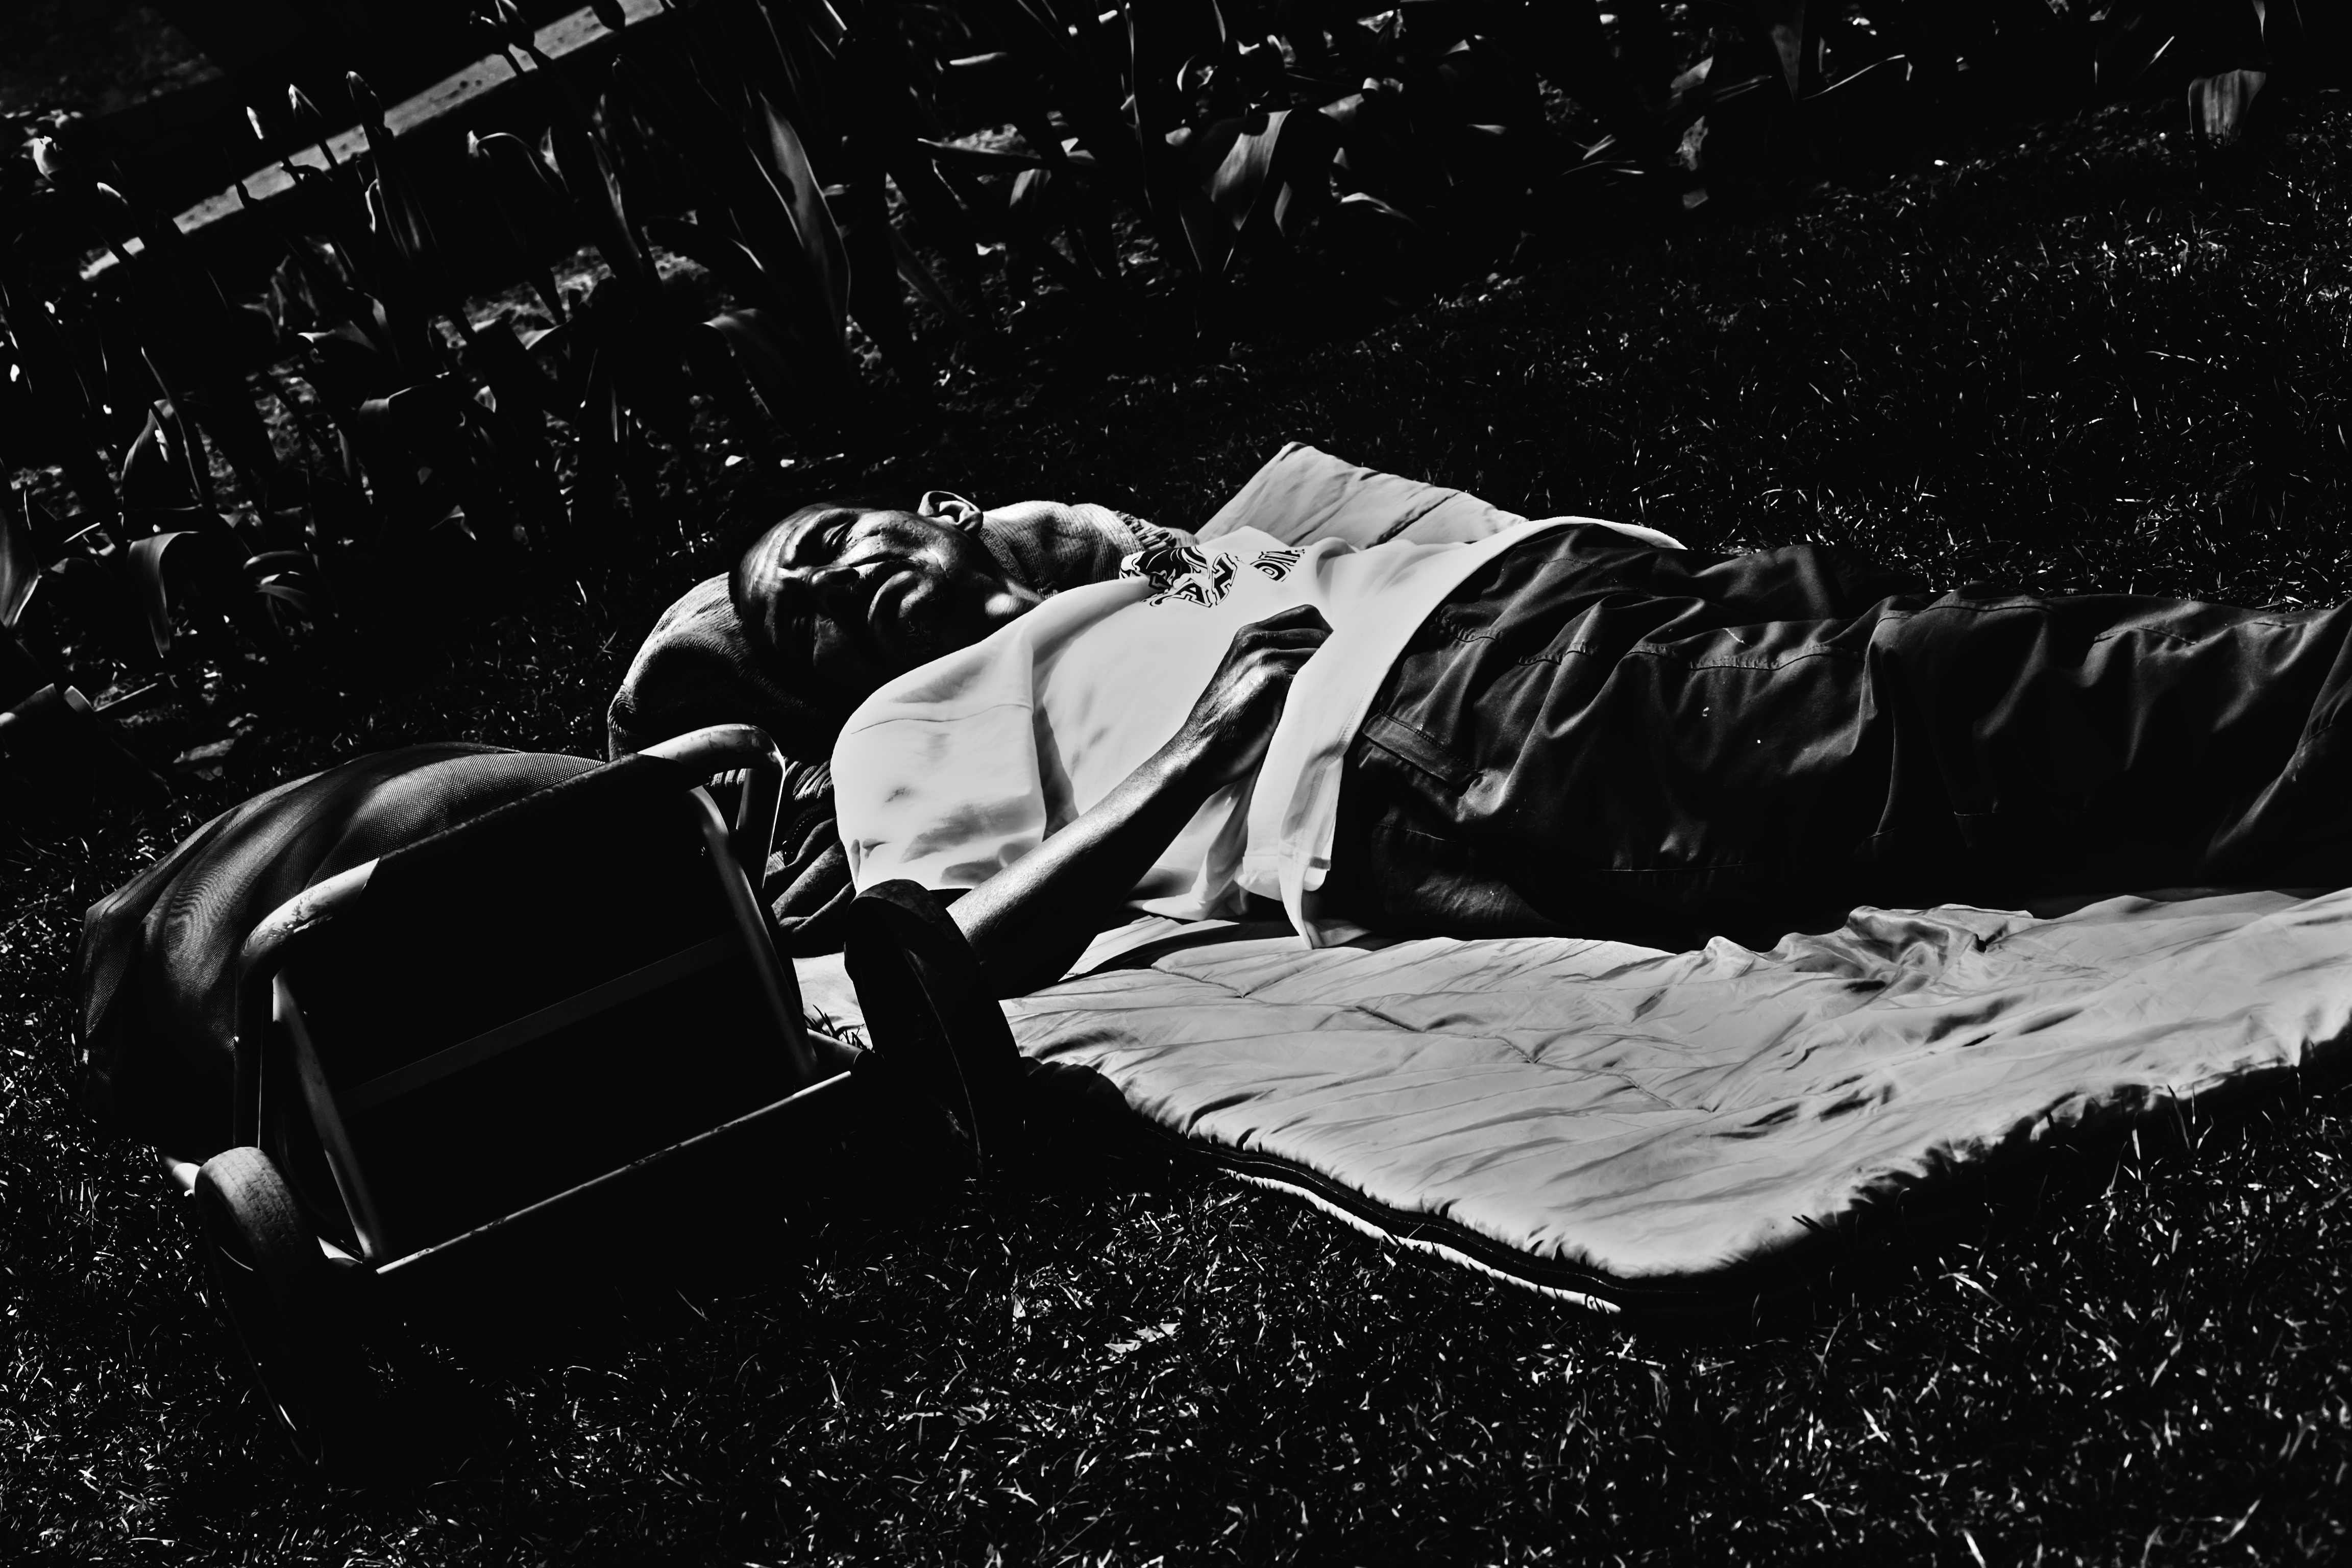 A homeless man sleeping in a park